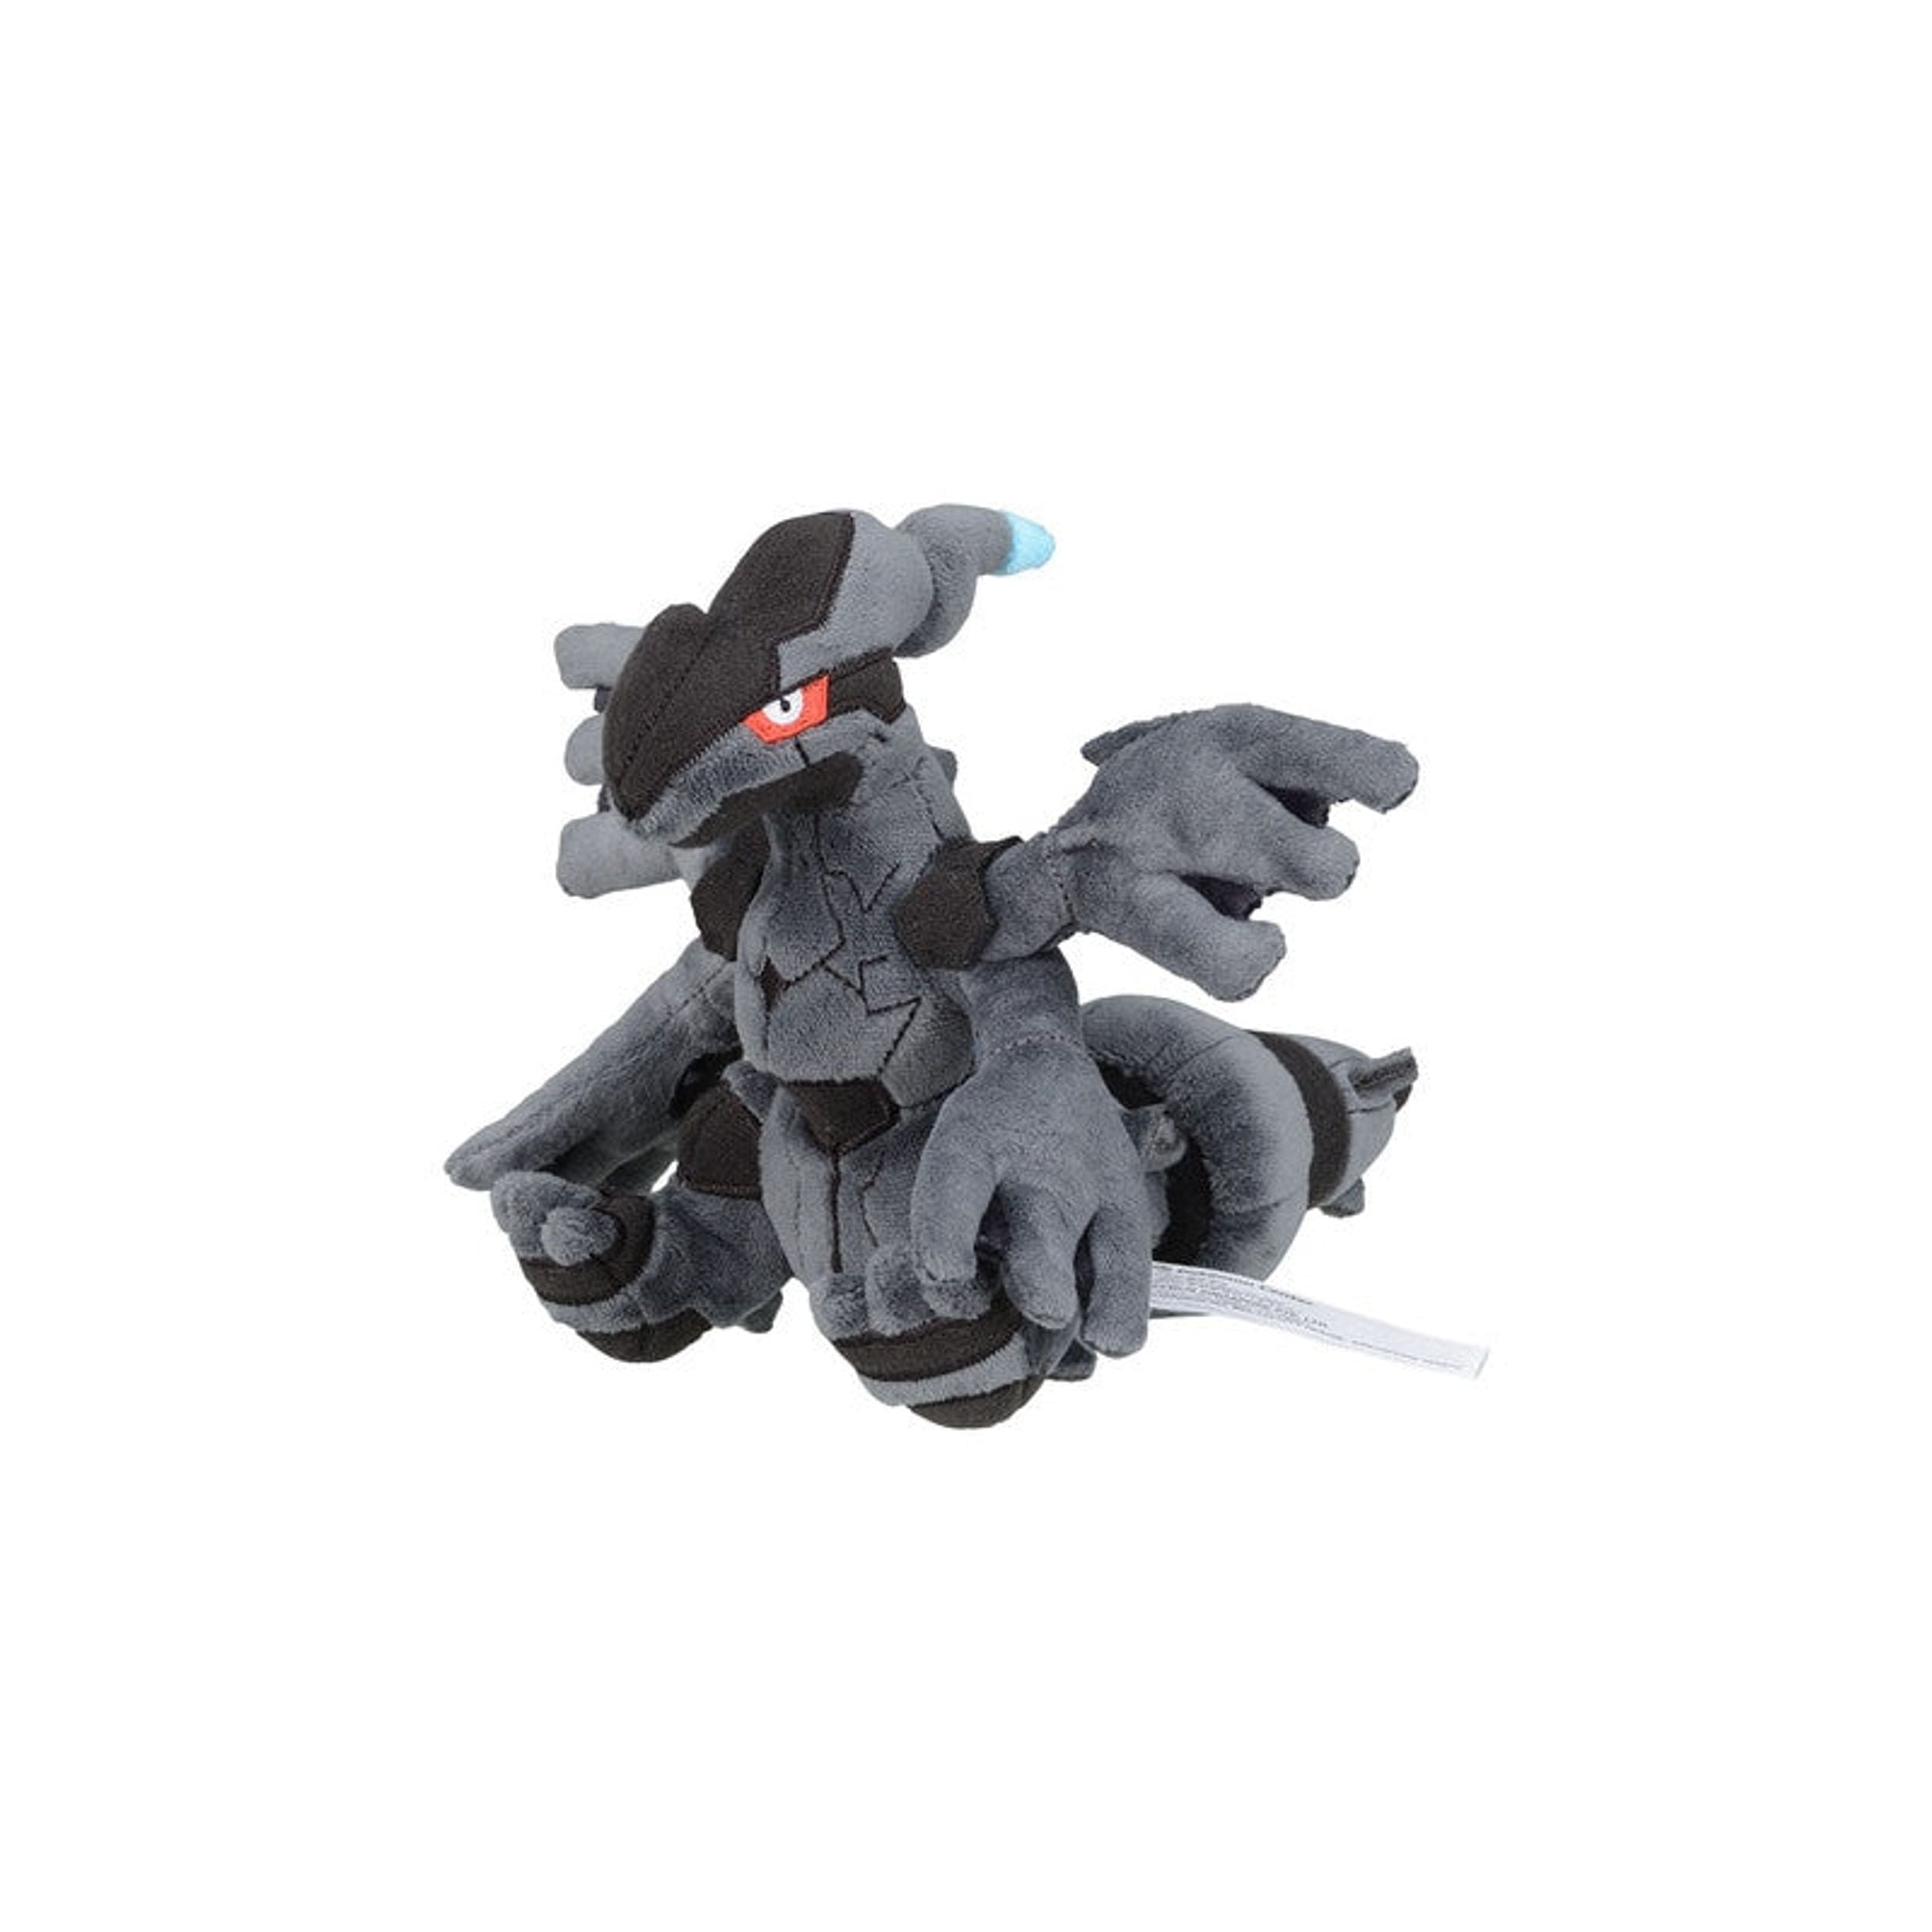 Zekrom Black & White Pokemon Figure - Pokemon Plushes, Toys & Cards at